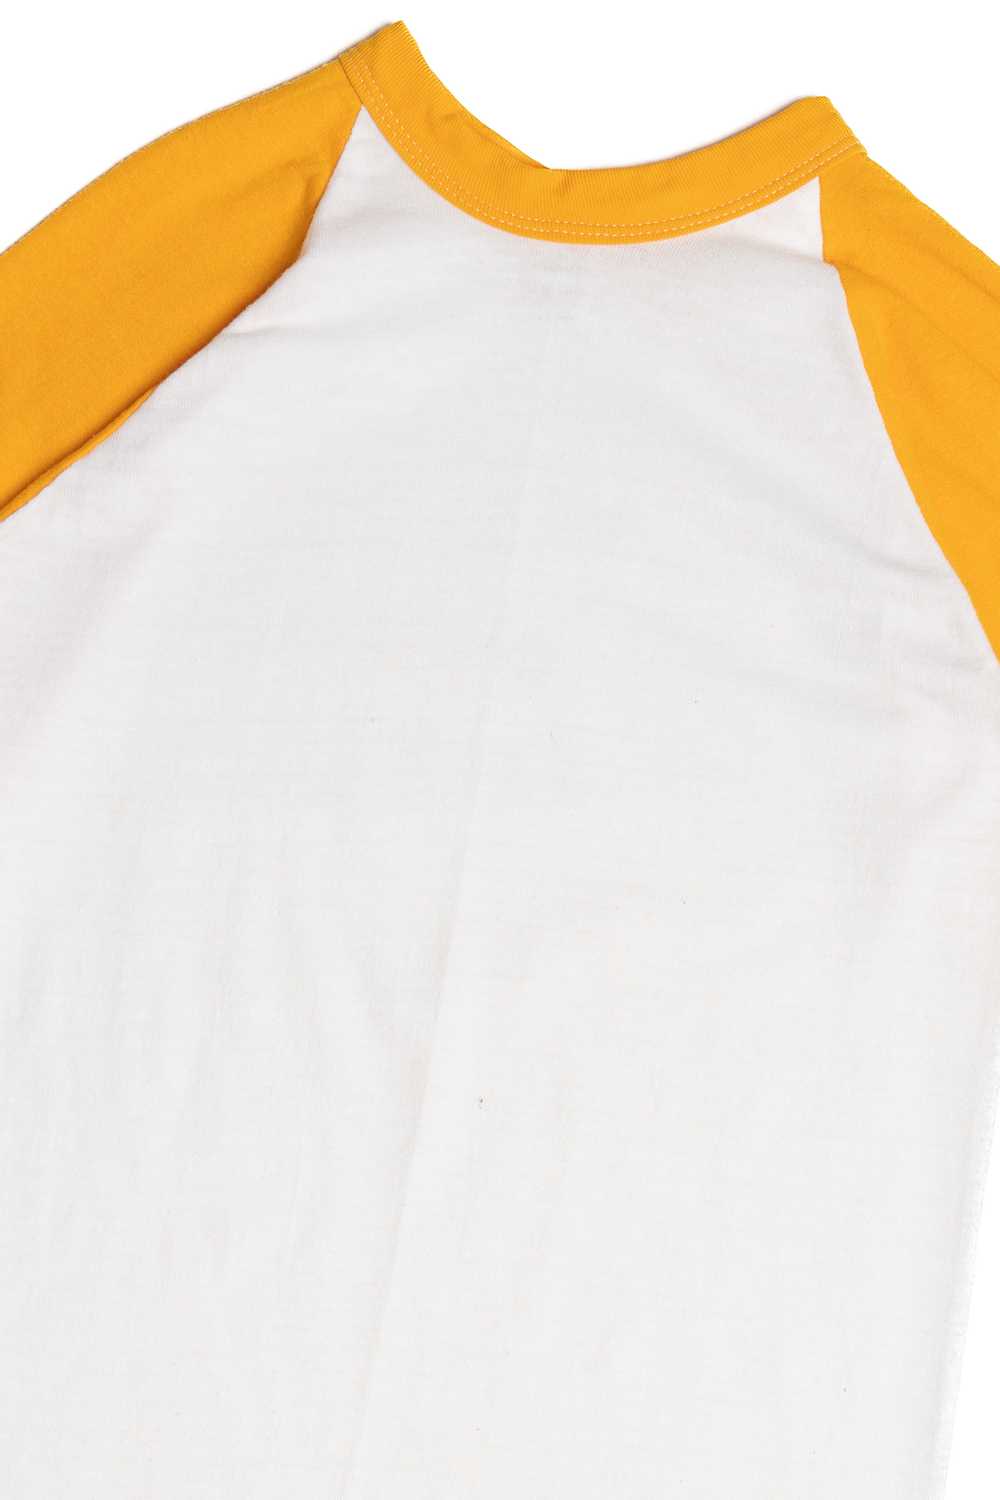 Vintage Yellow Blank Sportswear Raglan T-Shirt - image 2